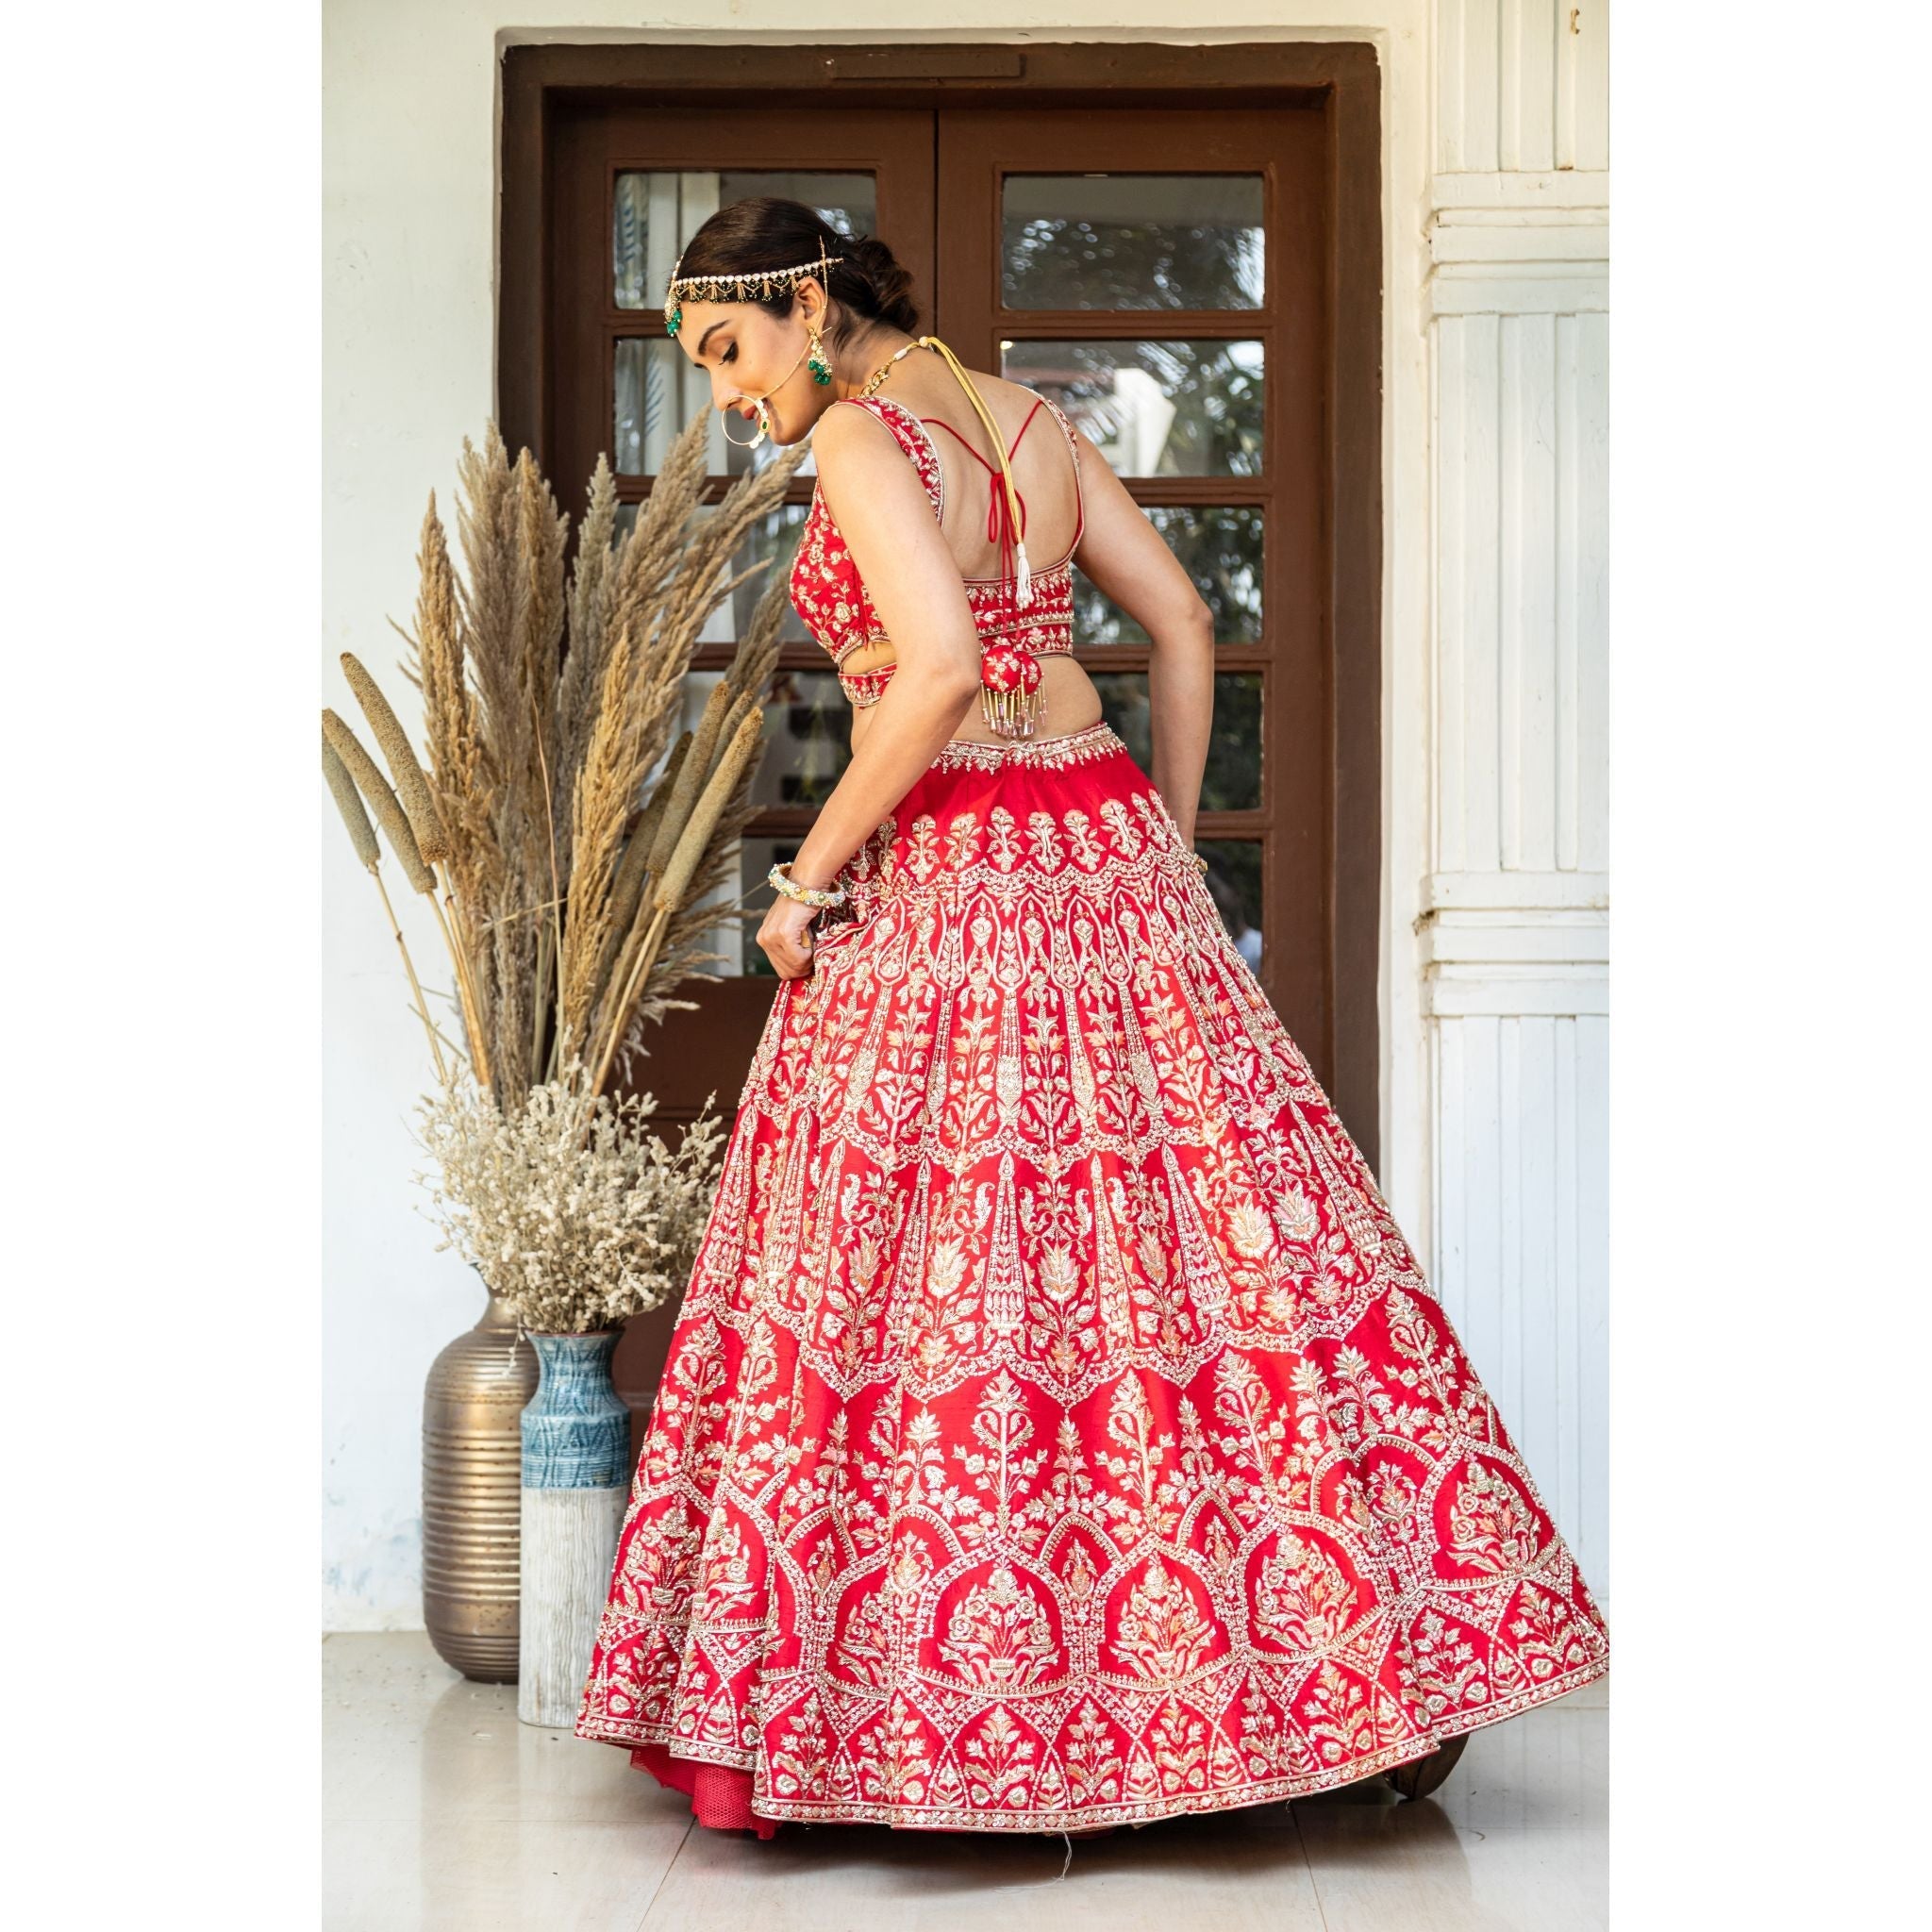 Venetian Red Floral Arch Lehenga Set - Indian Designer Bridal Wedding Outfit